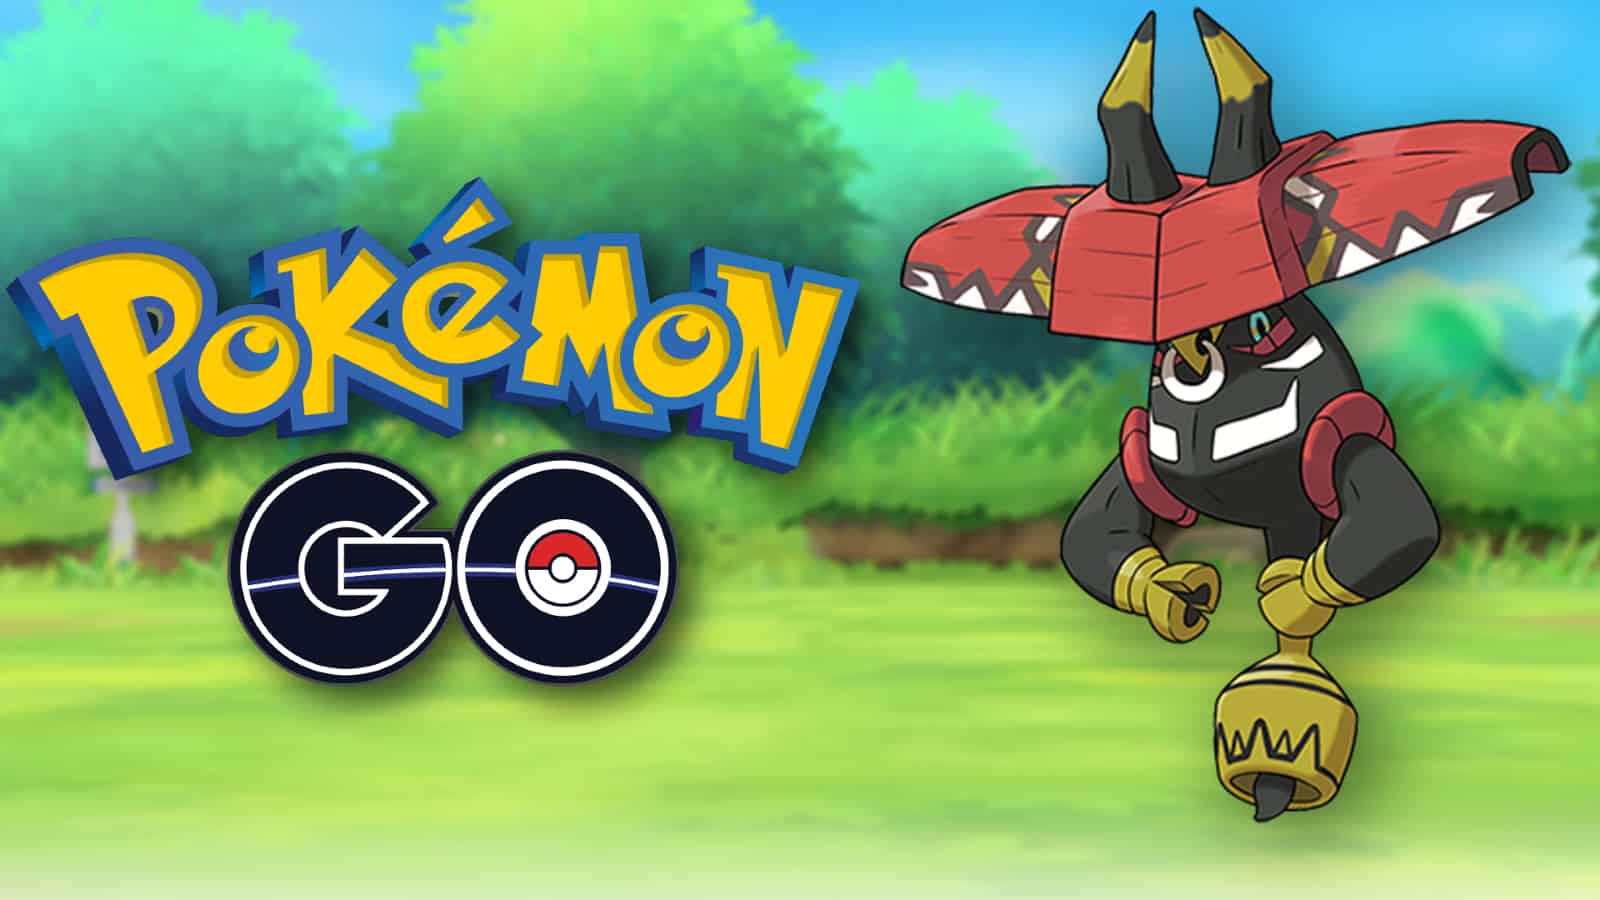 Pokémon Go: Alola To Alola Special Research Tasks (& Rewards)